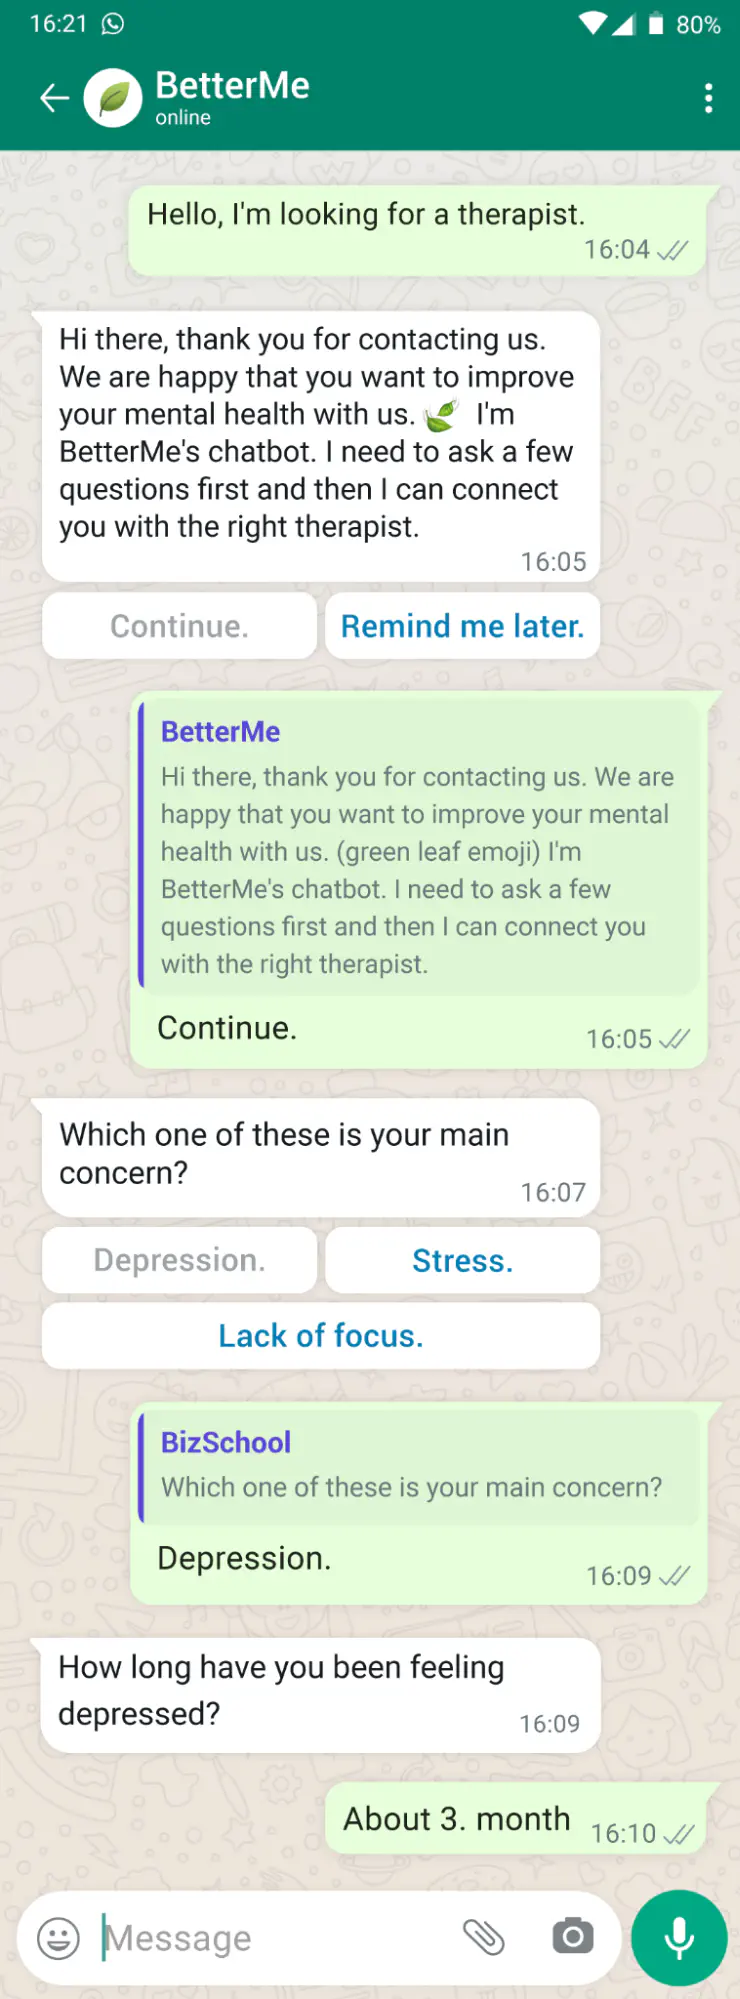 WhatsApp chatbot giving symptom assessment.